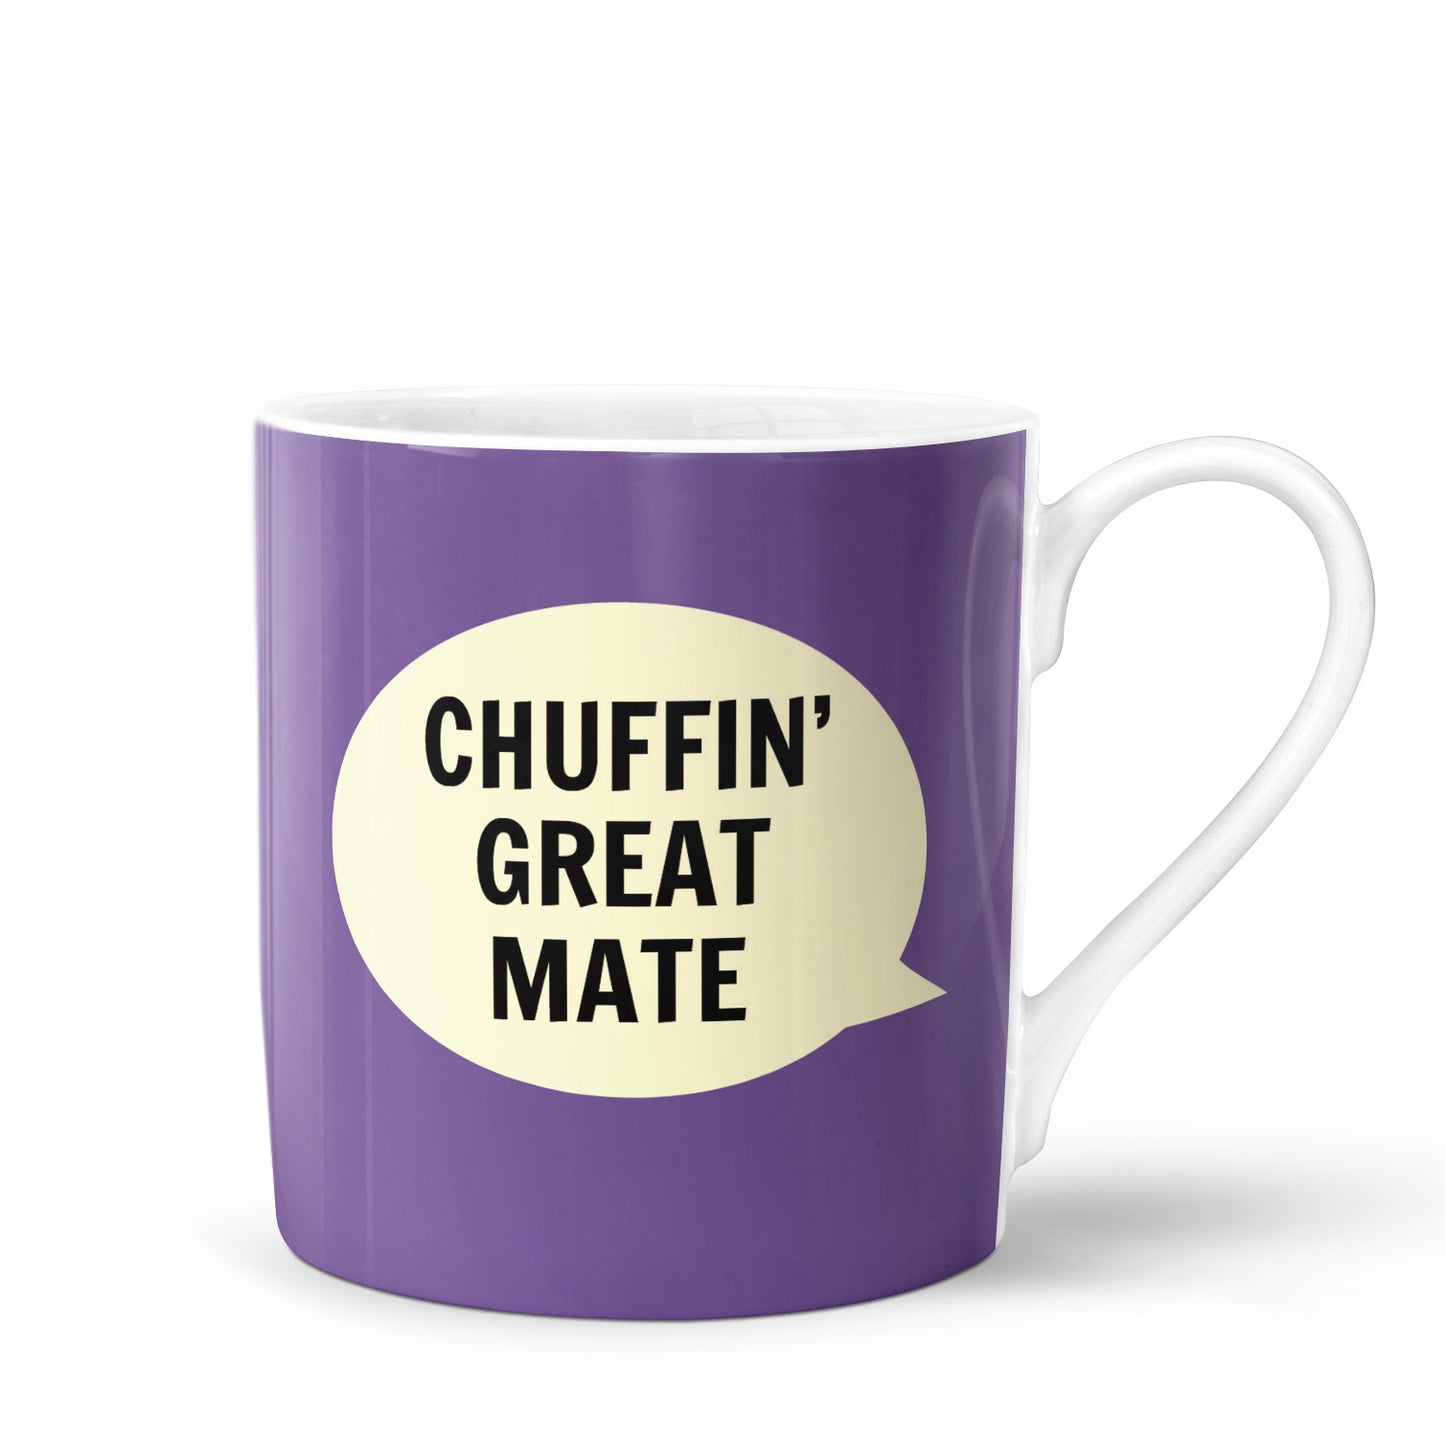 Chuffin’ Great Mate Bone China Mug - The Great Yorkshire Shop